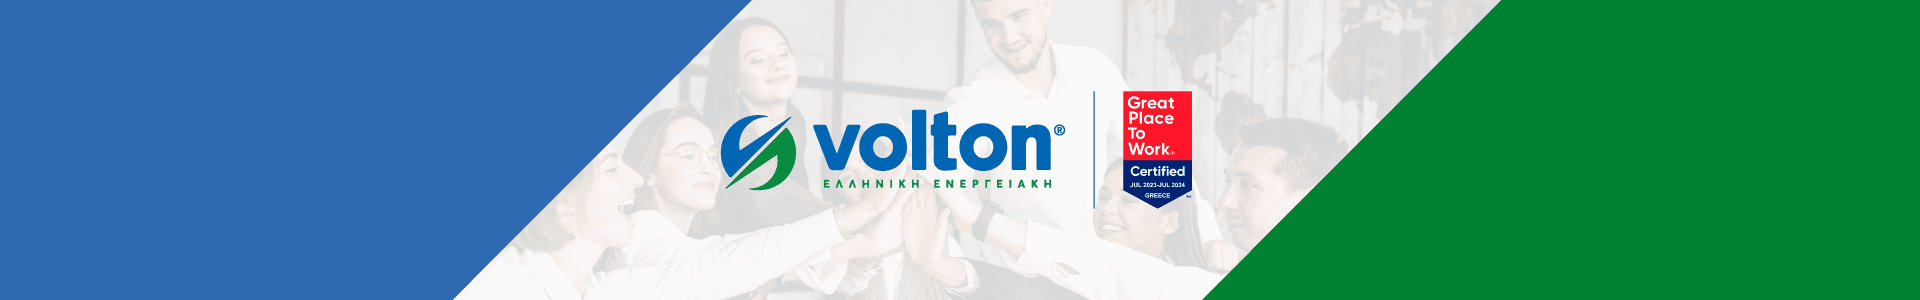 Volton Ελληνική Ενεργειακή Α.Ε. header cover image